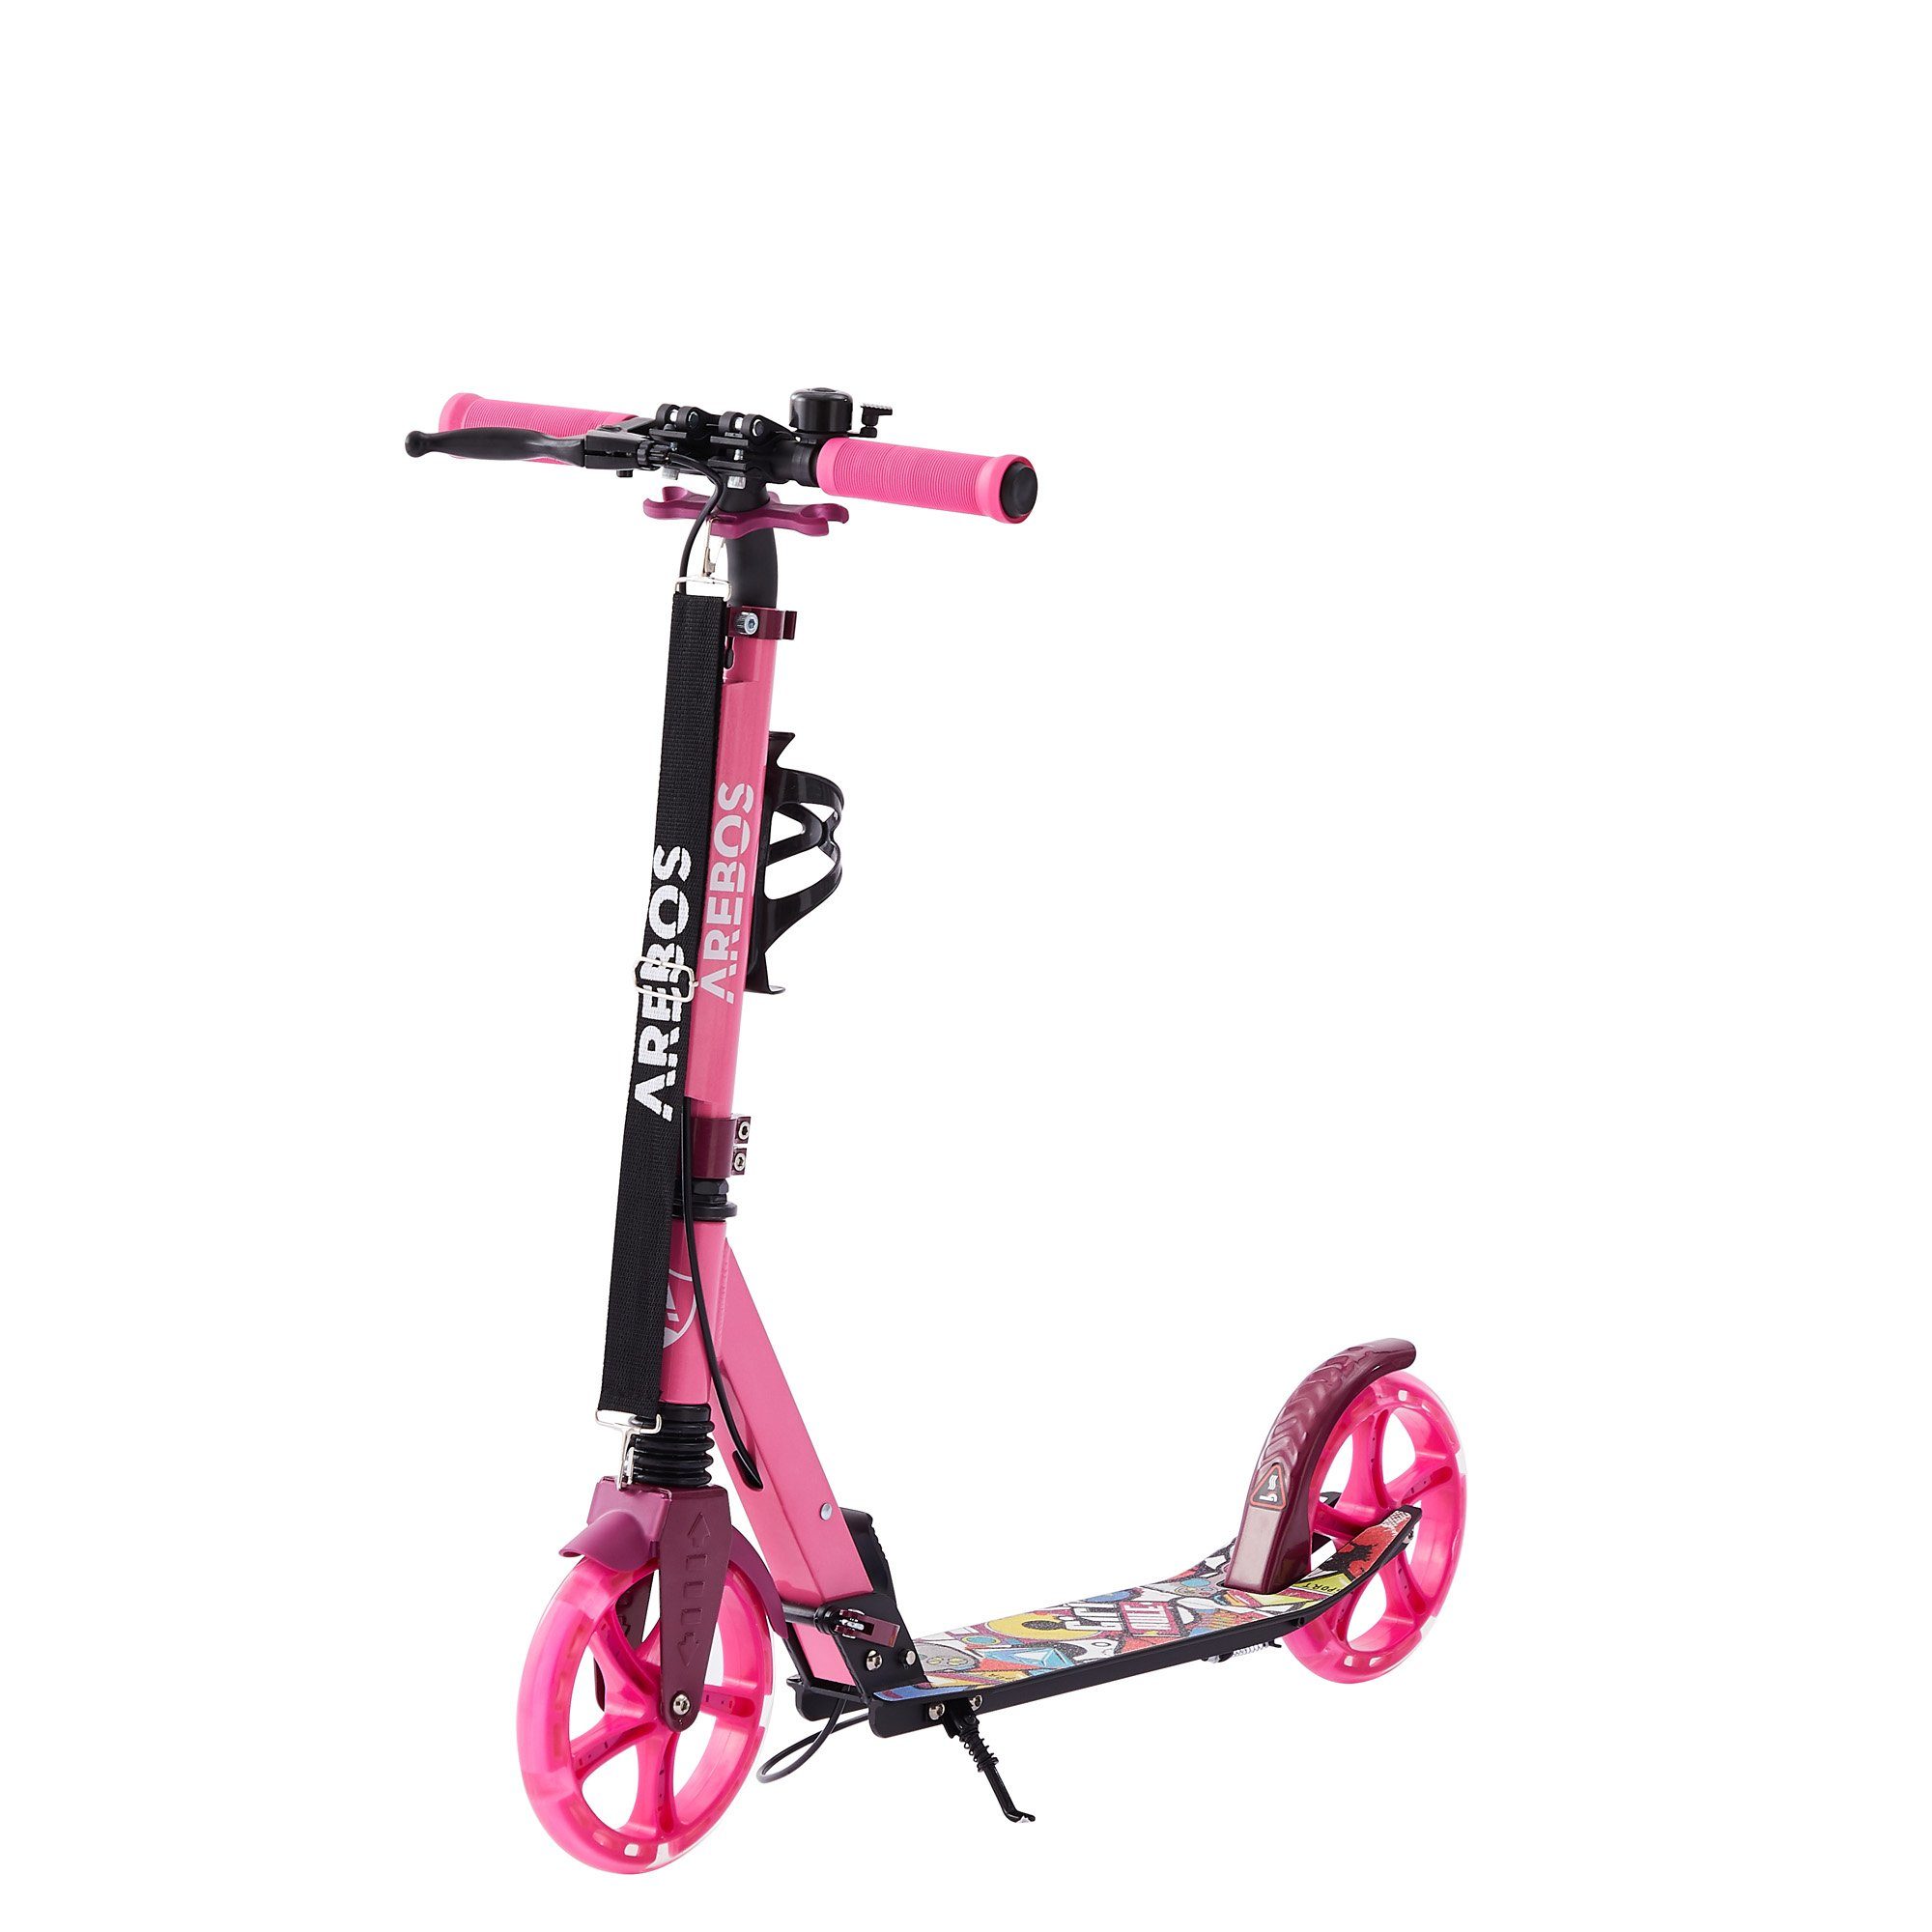 Arebos Tretroller Cityroller Tretroller mit LED Reifen, höhenverstellbar, klappbar Pink | Kinderroller